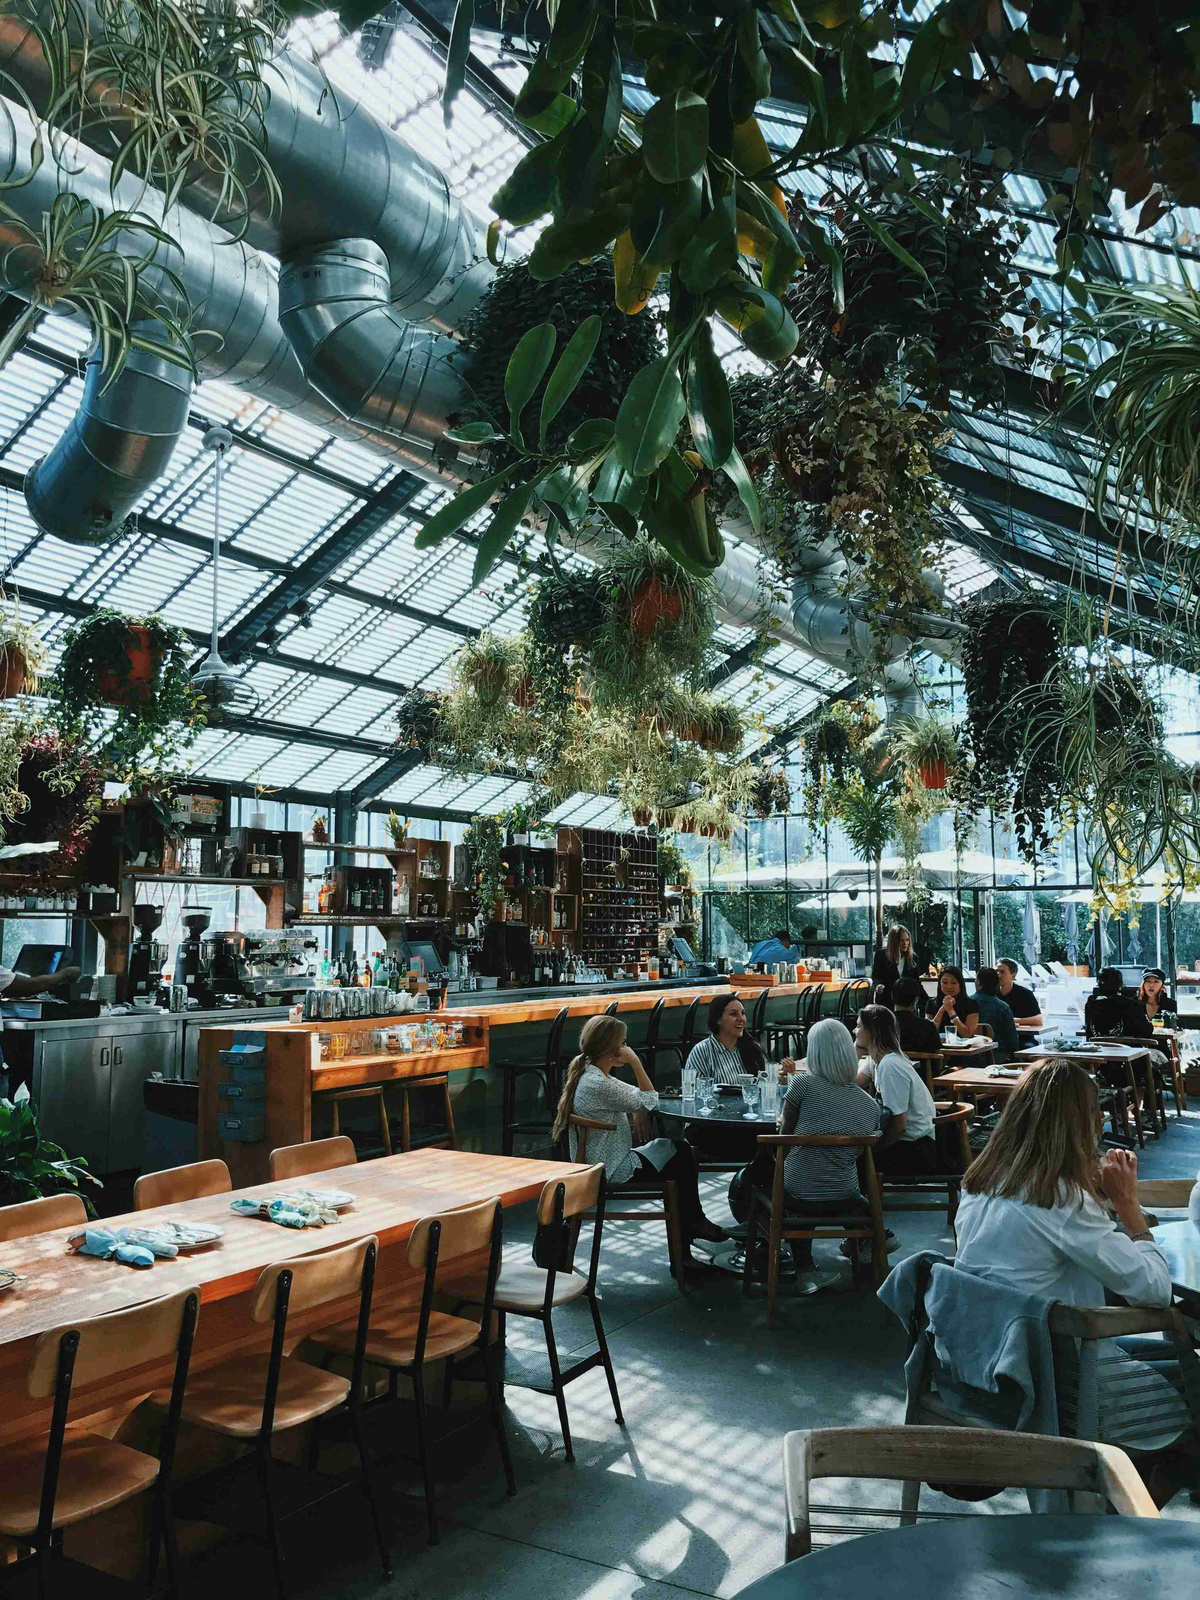 Urban_Garden_Restaurant_With_Hanging_Plants